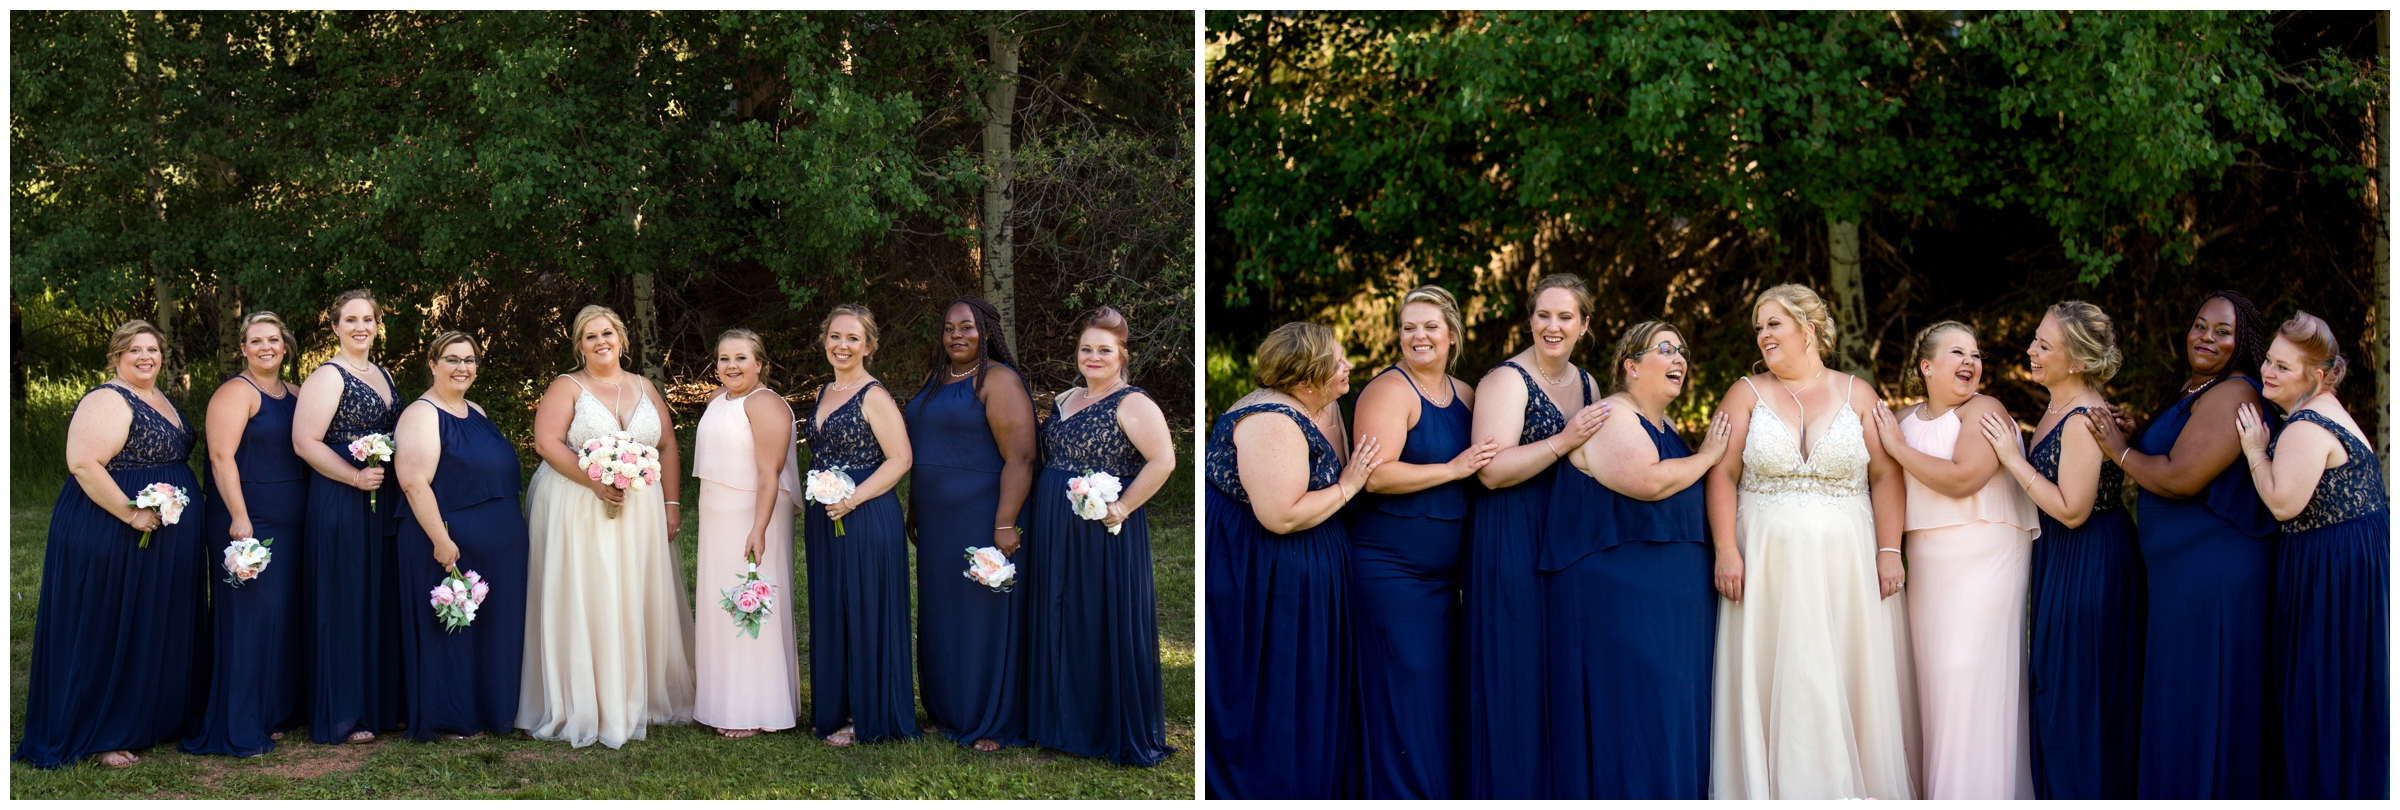 bridesmaids in navy blue and light pink at Colorado summer wedding